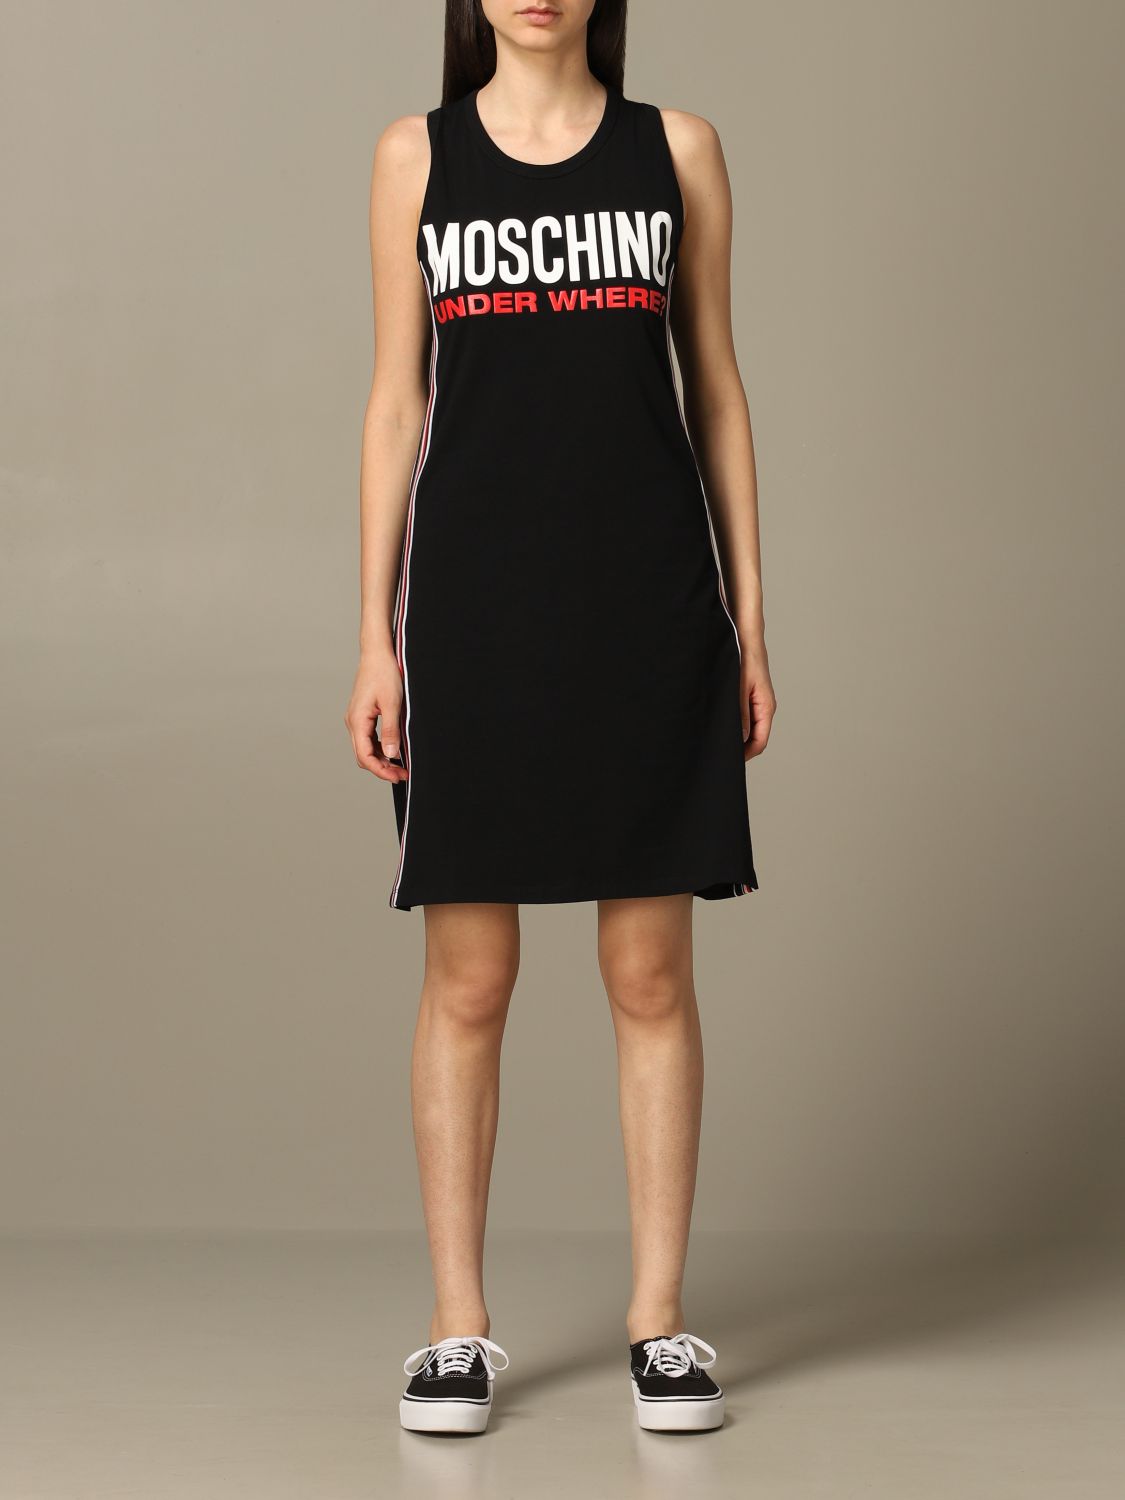 moschino top dress